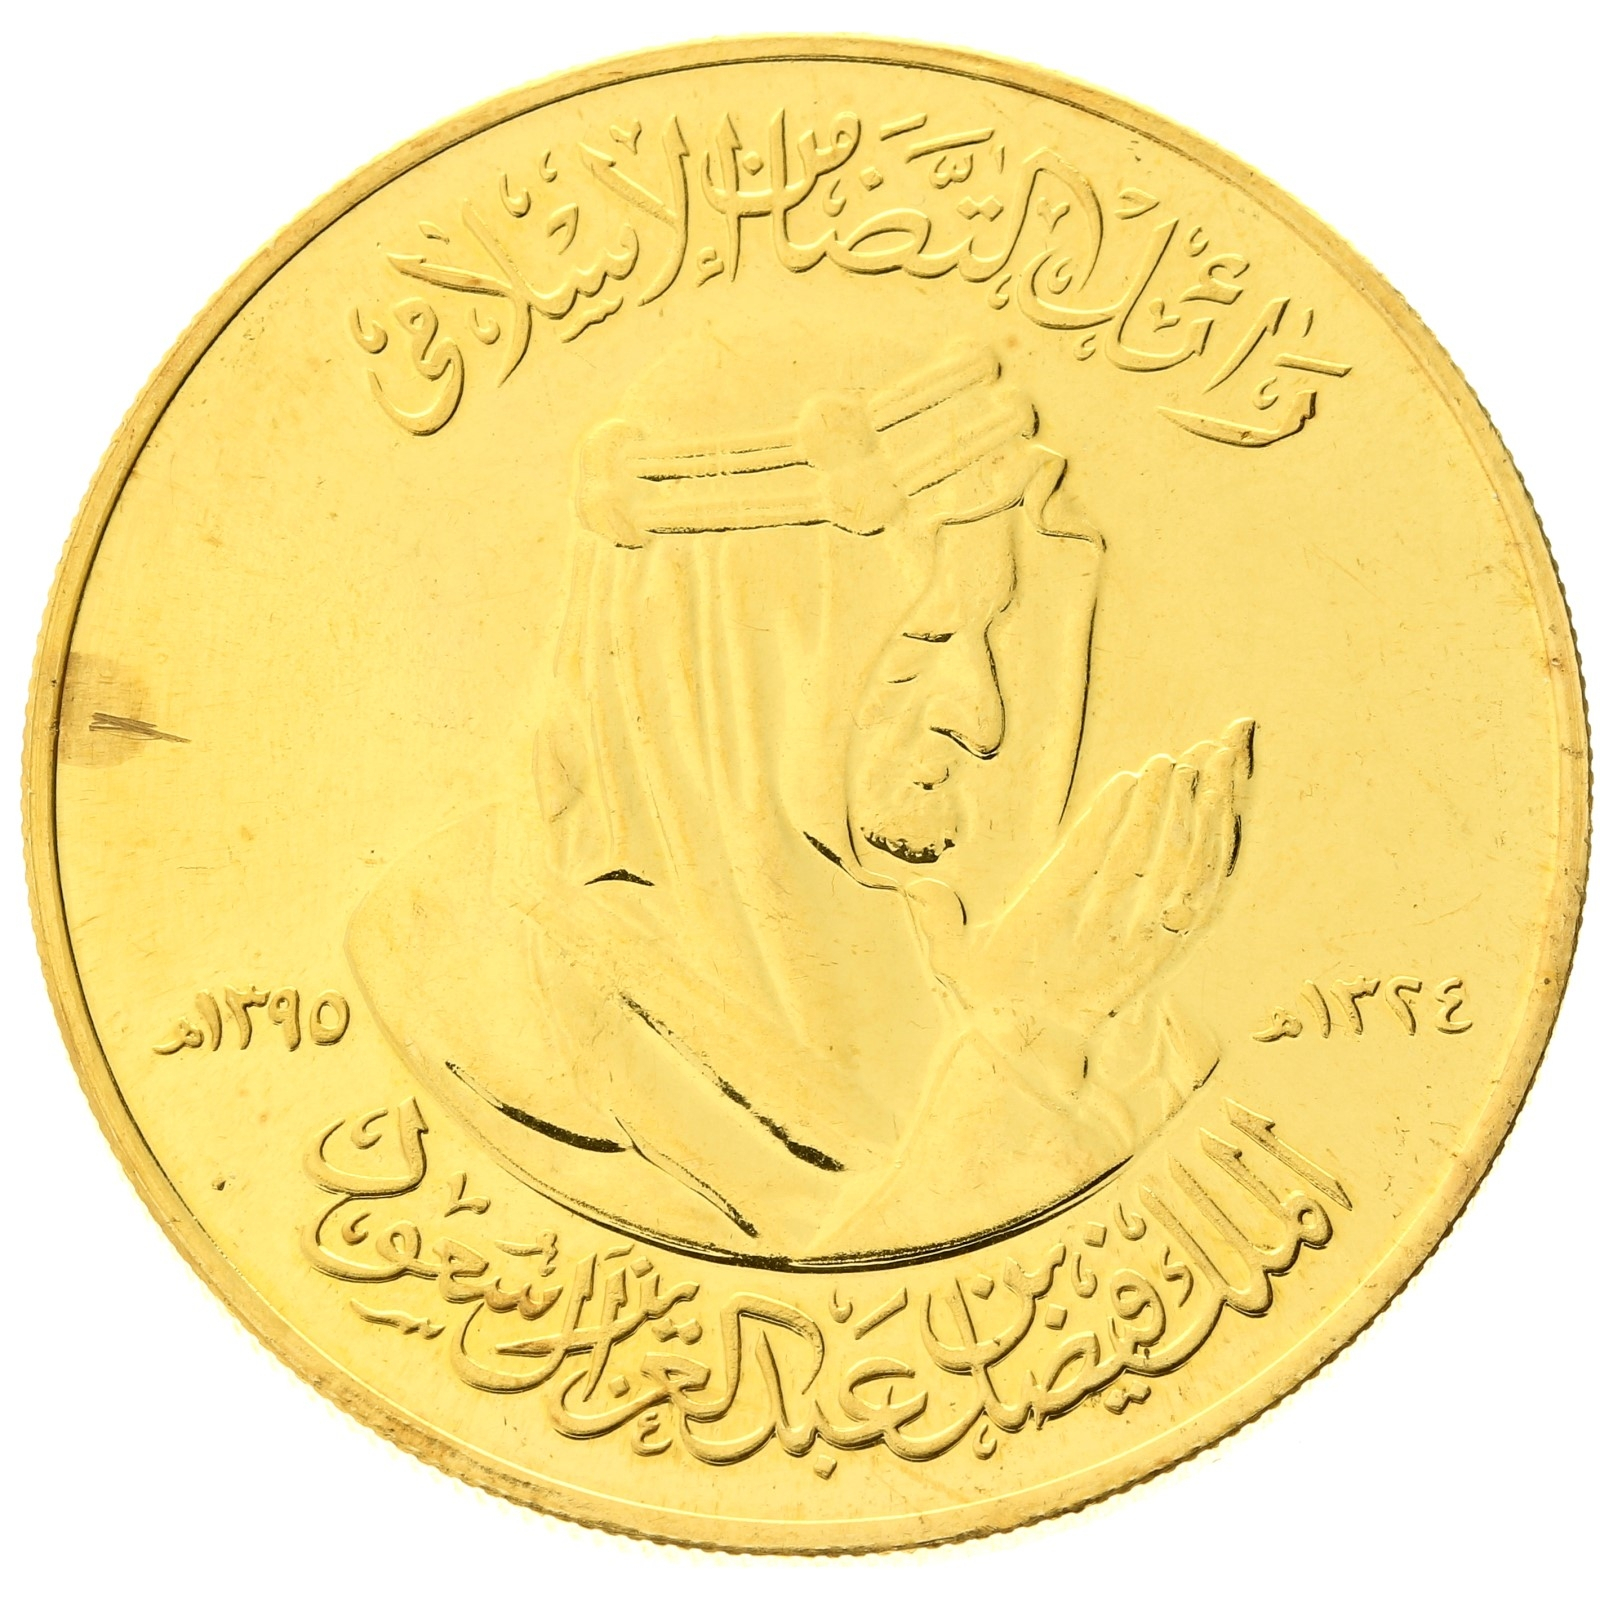 Saudi Arabia - SAMA Medal - 1975 - Khalid - Death of King Faisal bin Abdulaziz Al Saud